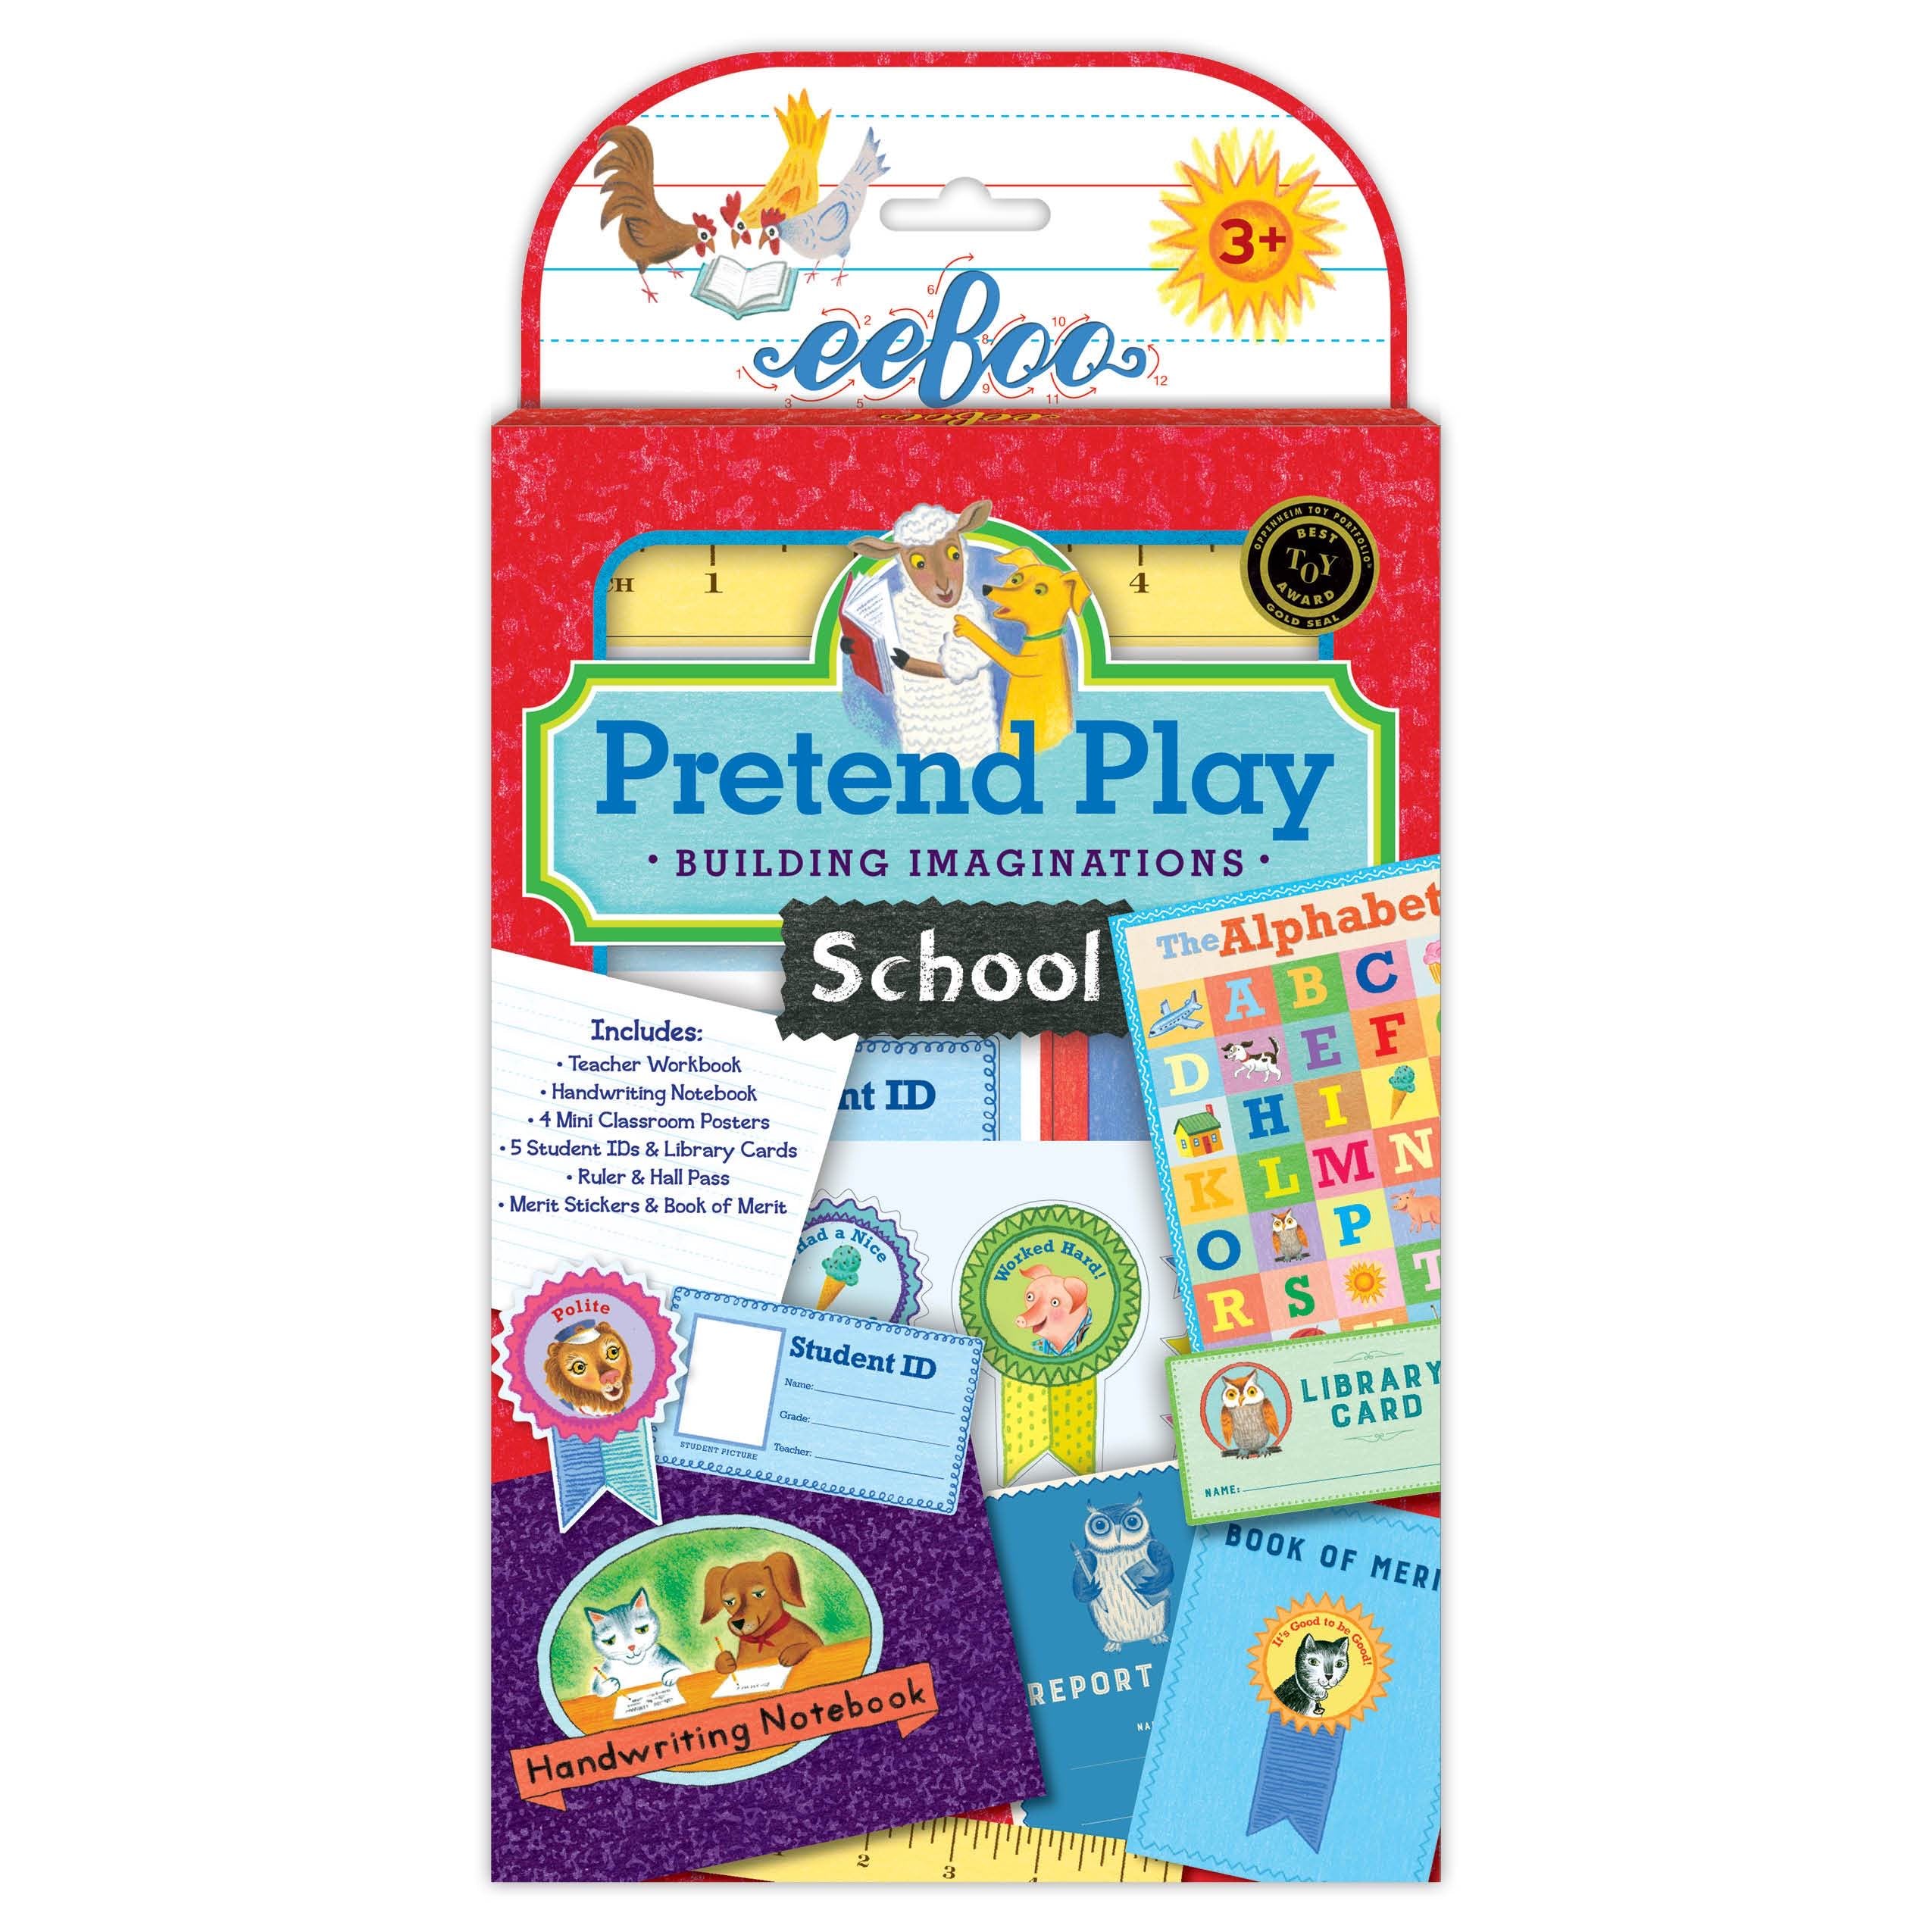 Eeboo Pretend Play School    